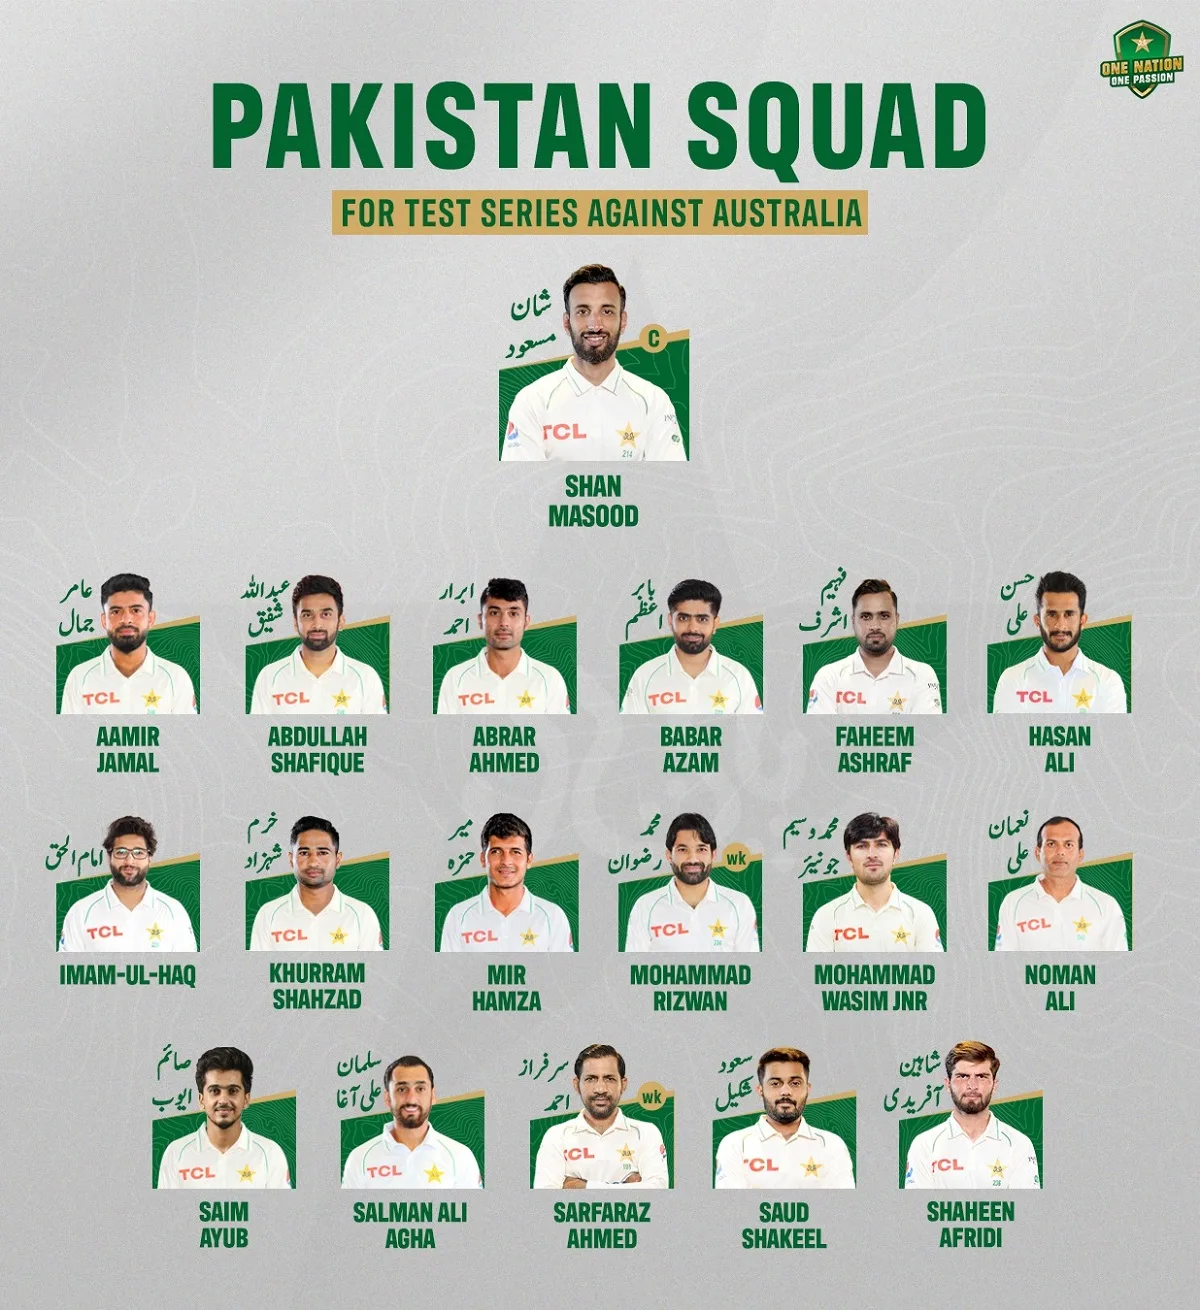 Pakistan's Test squad announced for Australia series